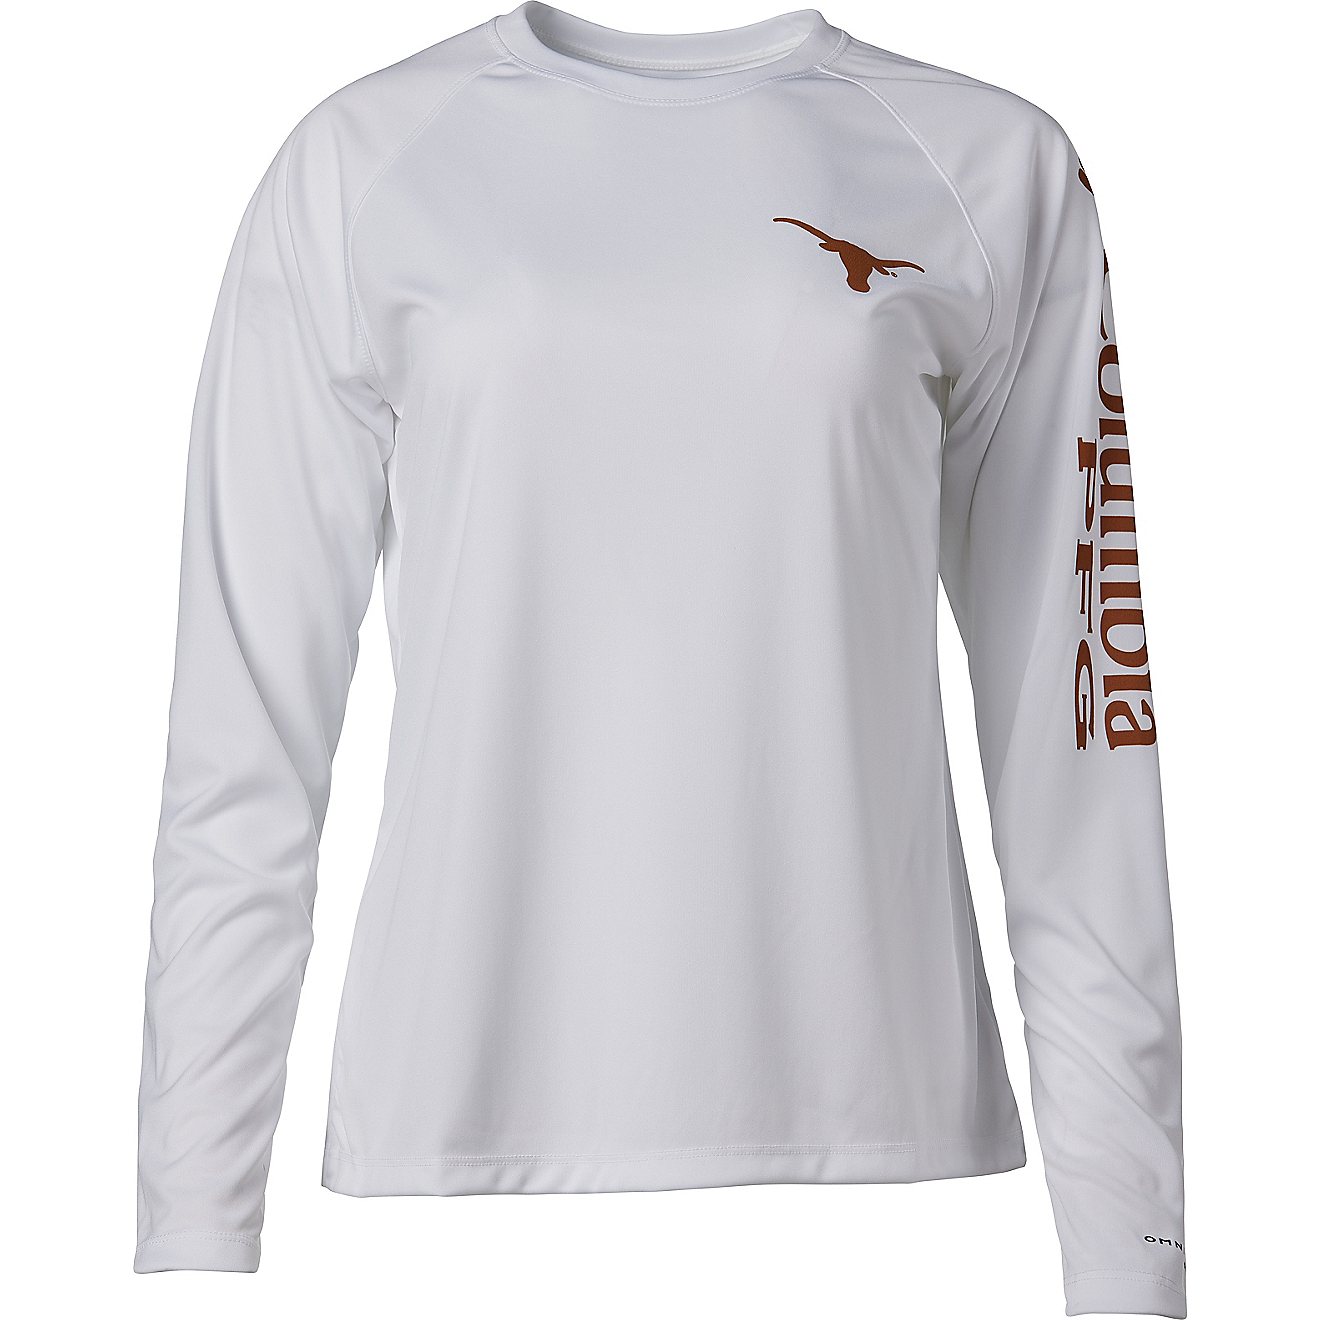 Columbia Sportswear Women's University of Texas Tidal Long Sleeve T-shirt                                                        - view number 6